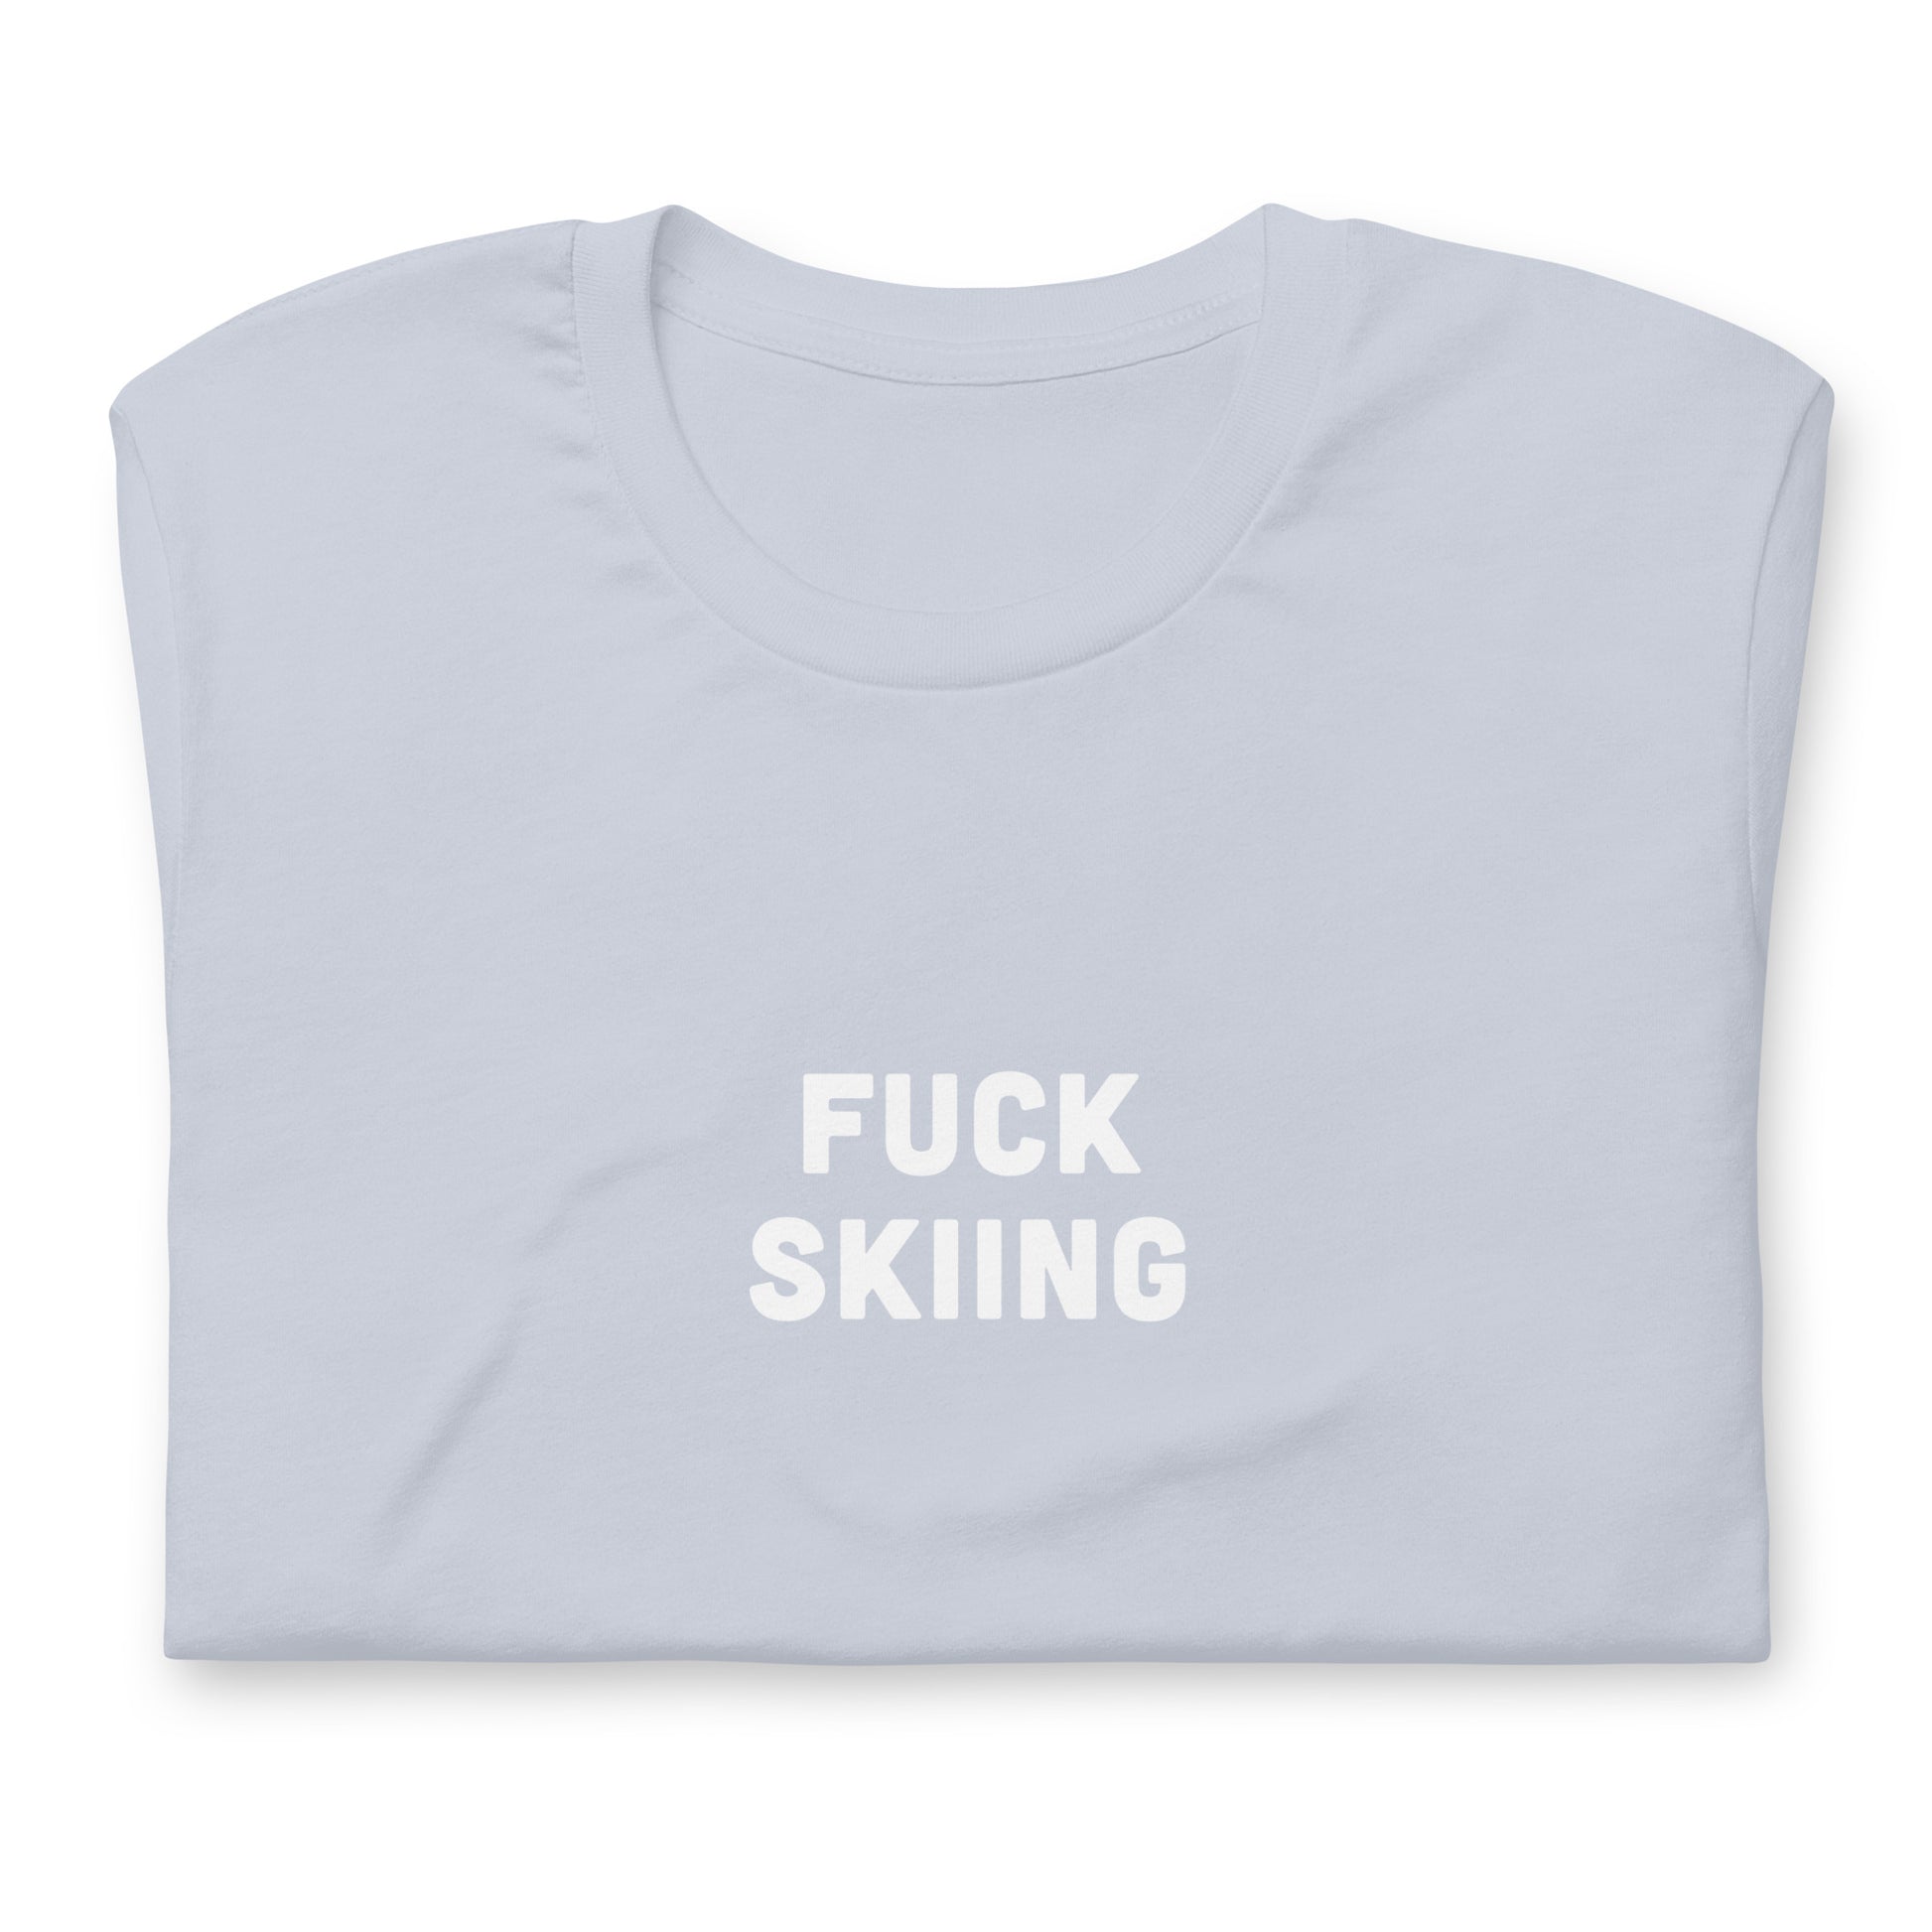 Fuck Skiing T-Shirt Size M Color Asphalt